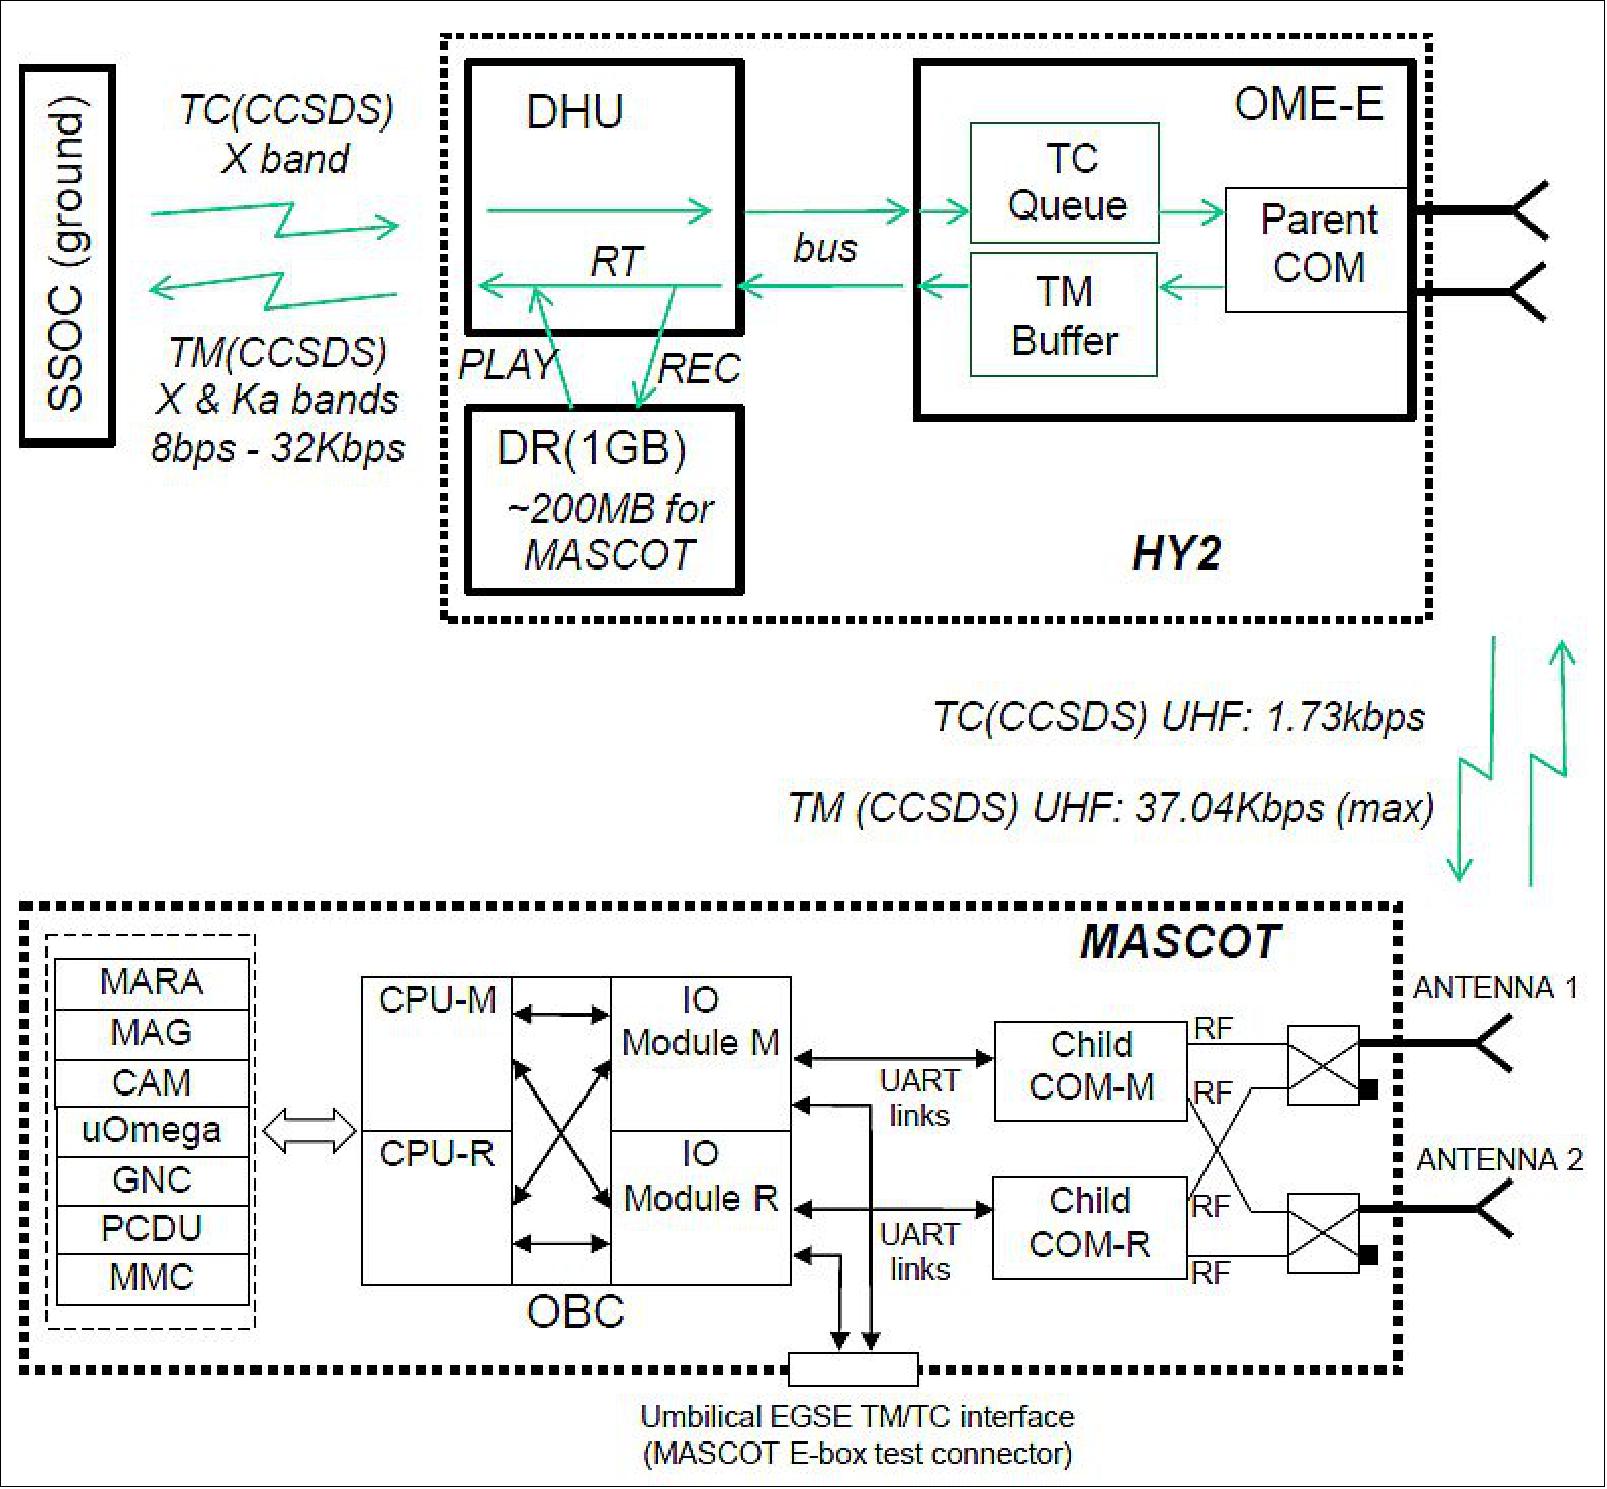 Figure 127: MASCOT communication subsystems overview (image credit: DLR, Telespazio VEGA)